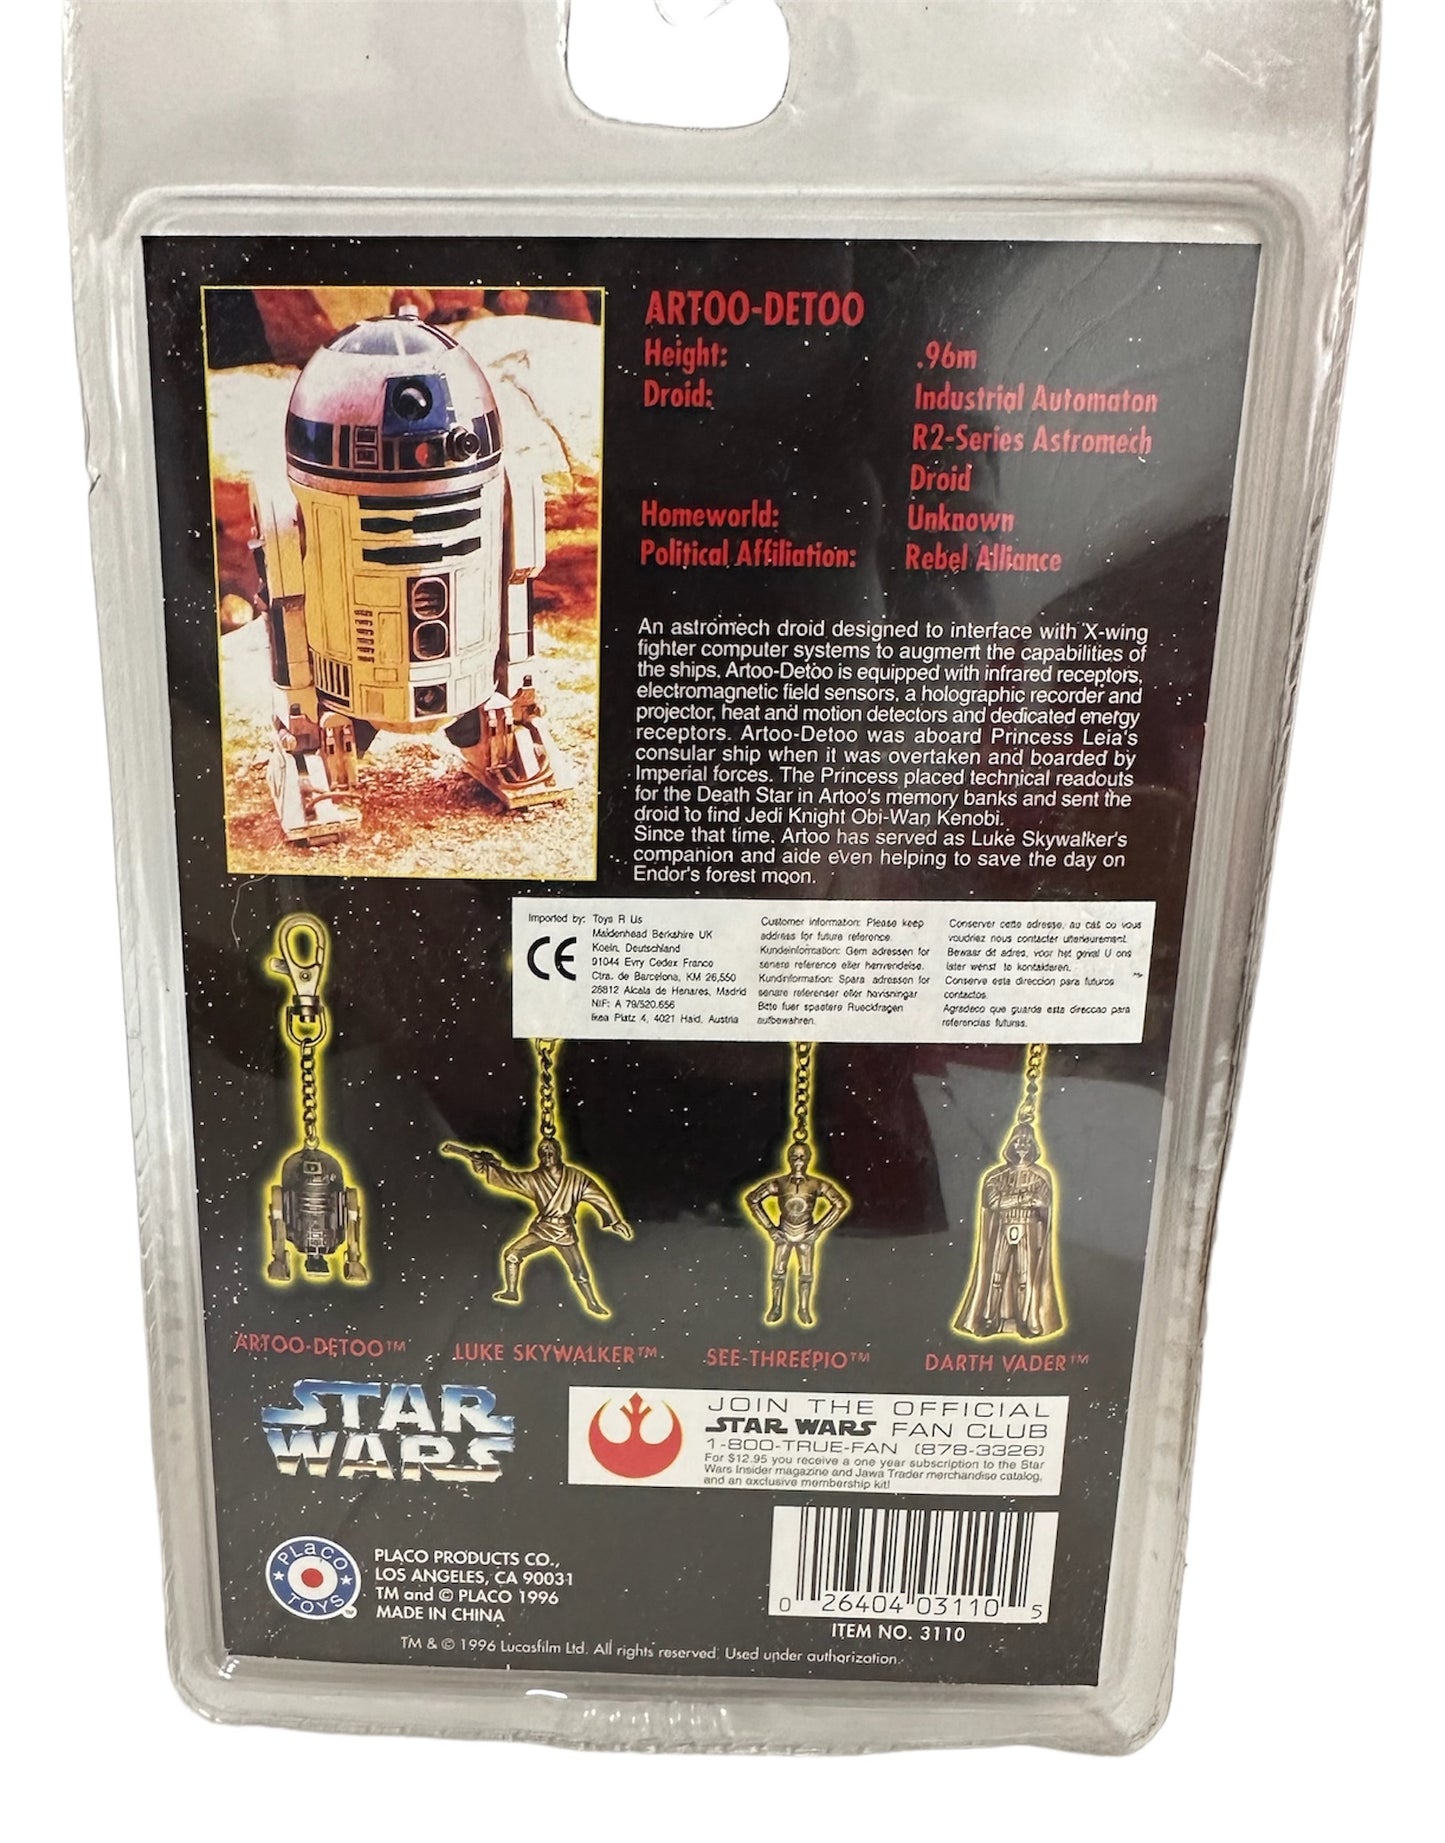 Vintage 1996 Star Wars Character Artoo-Detoo (R2-D2) Die Cast Metal Key Chain - Brand New Factory Sealed Shop Stock Room Find